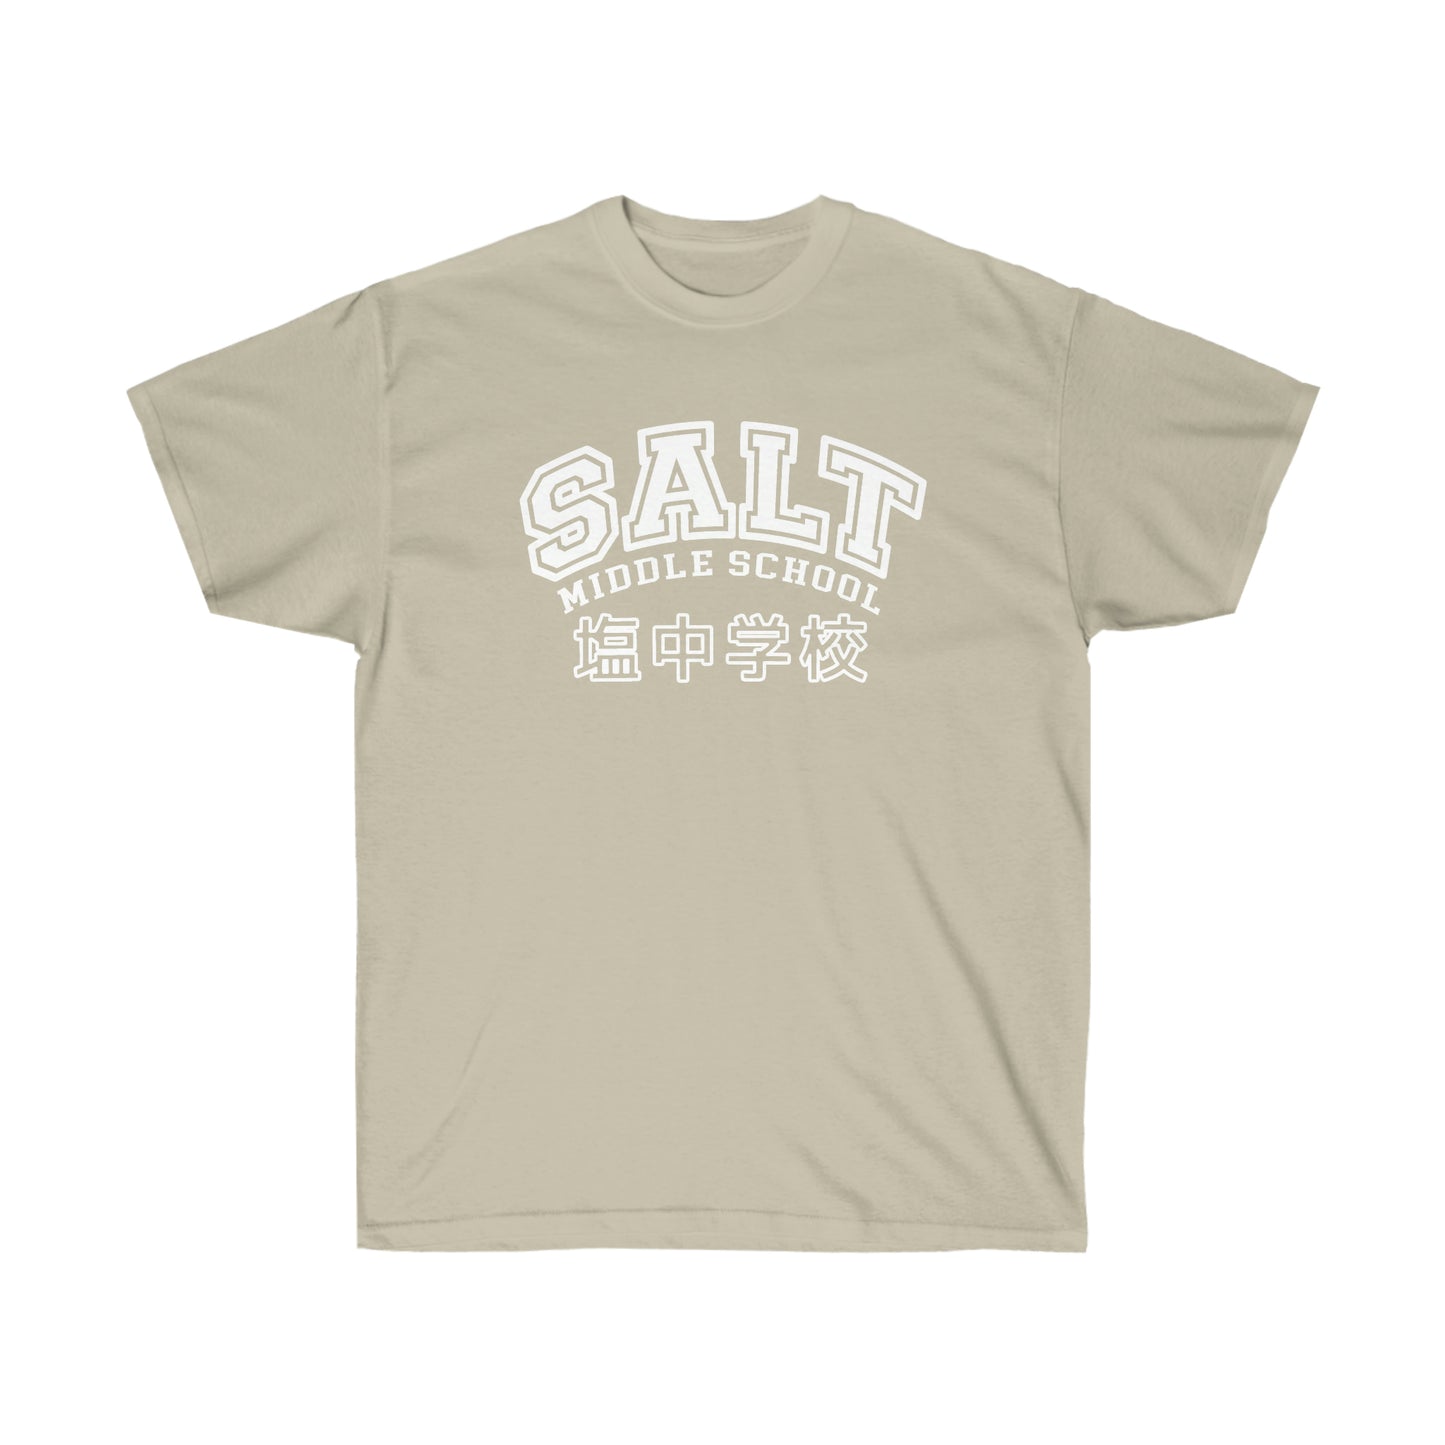 Salt Middle School t-shirt Body Improvement Club Shirt Mobs shigeos